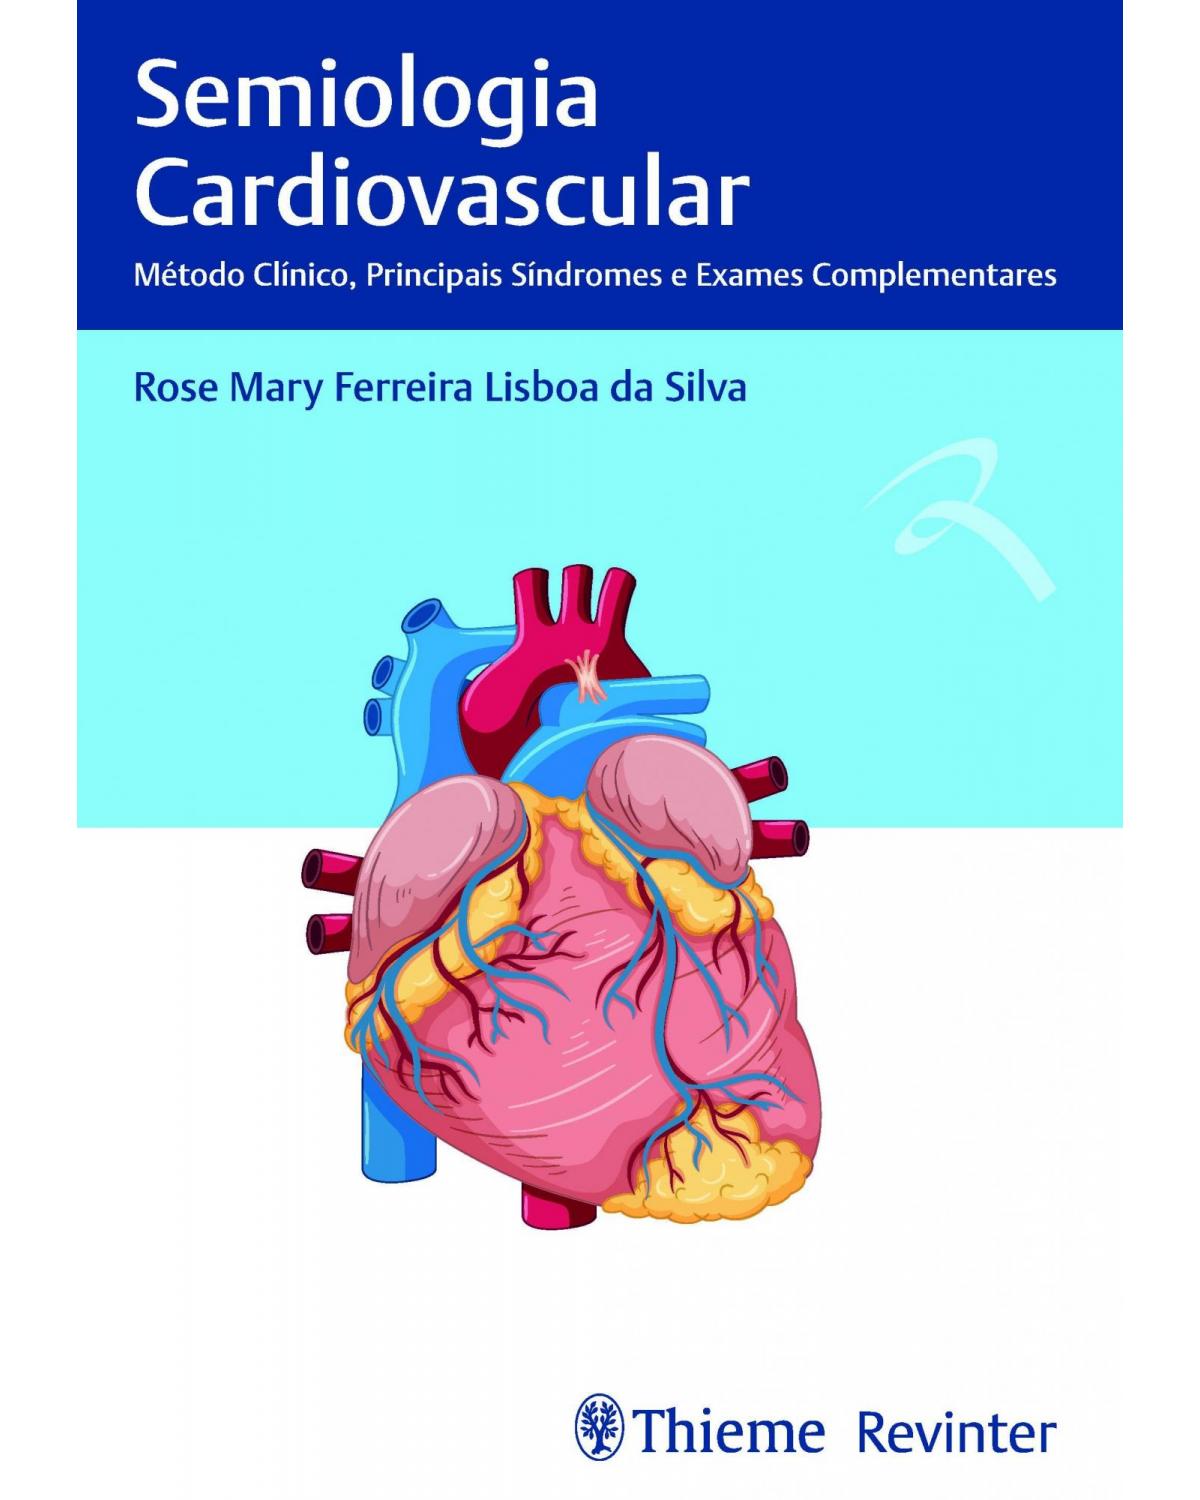 Semiologia cardiovascular - método clínico, principais síndromes e exames complementares - 1ª Edição | 2019